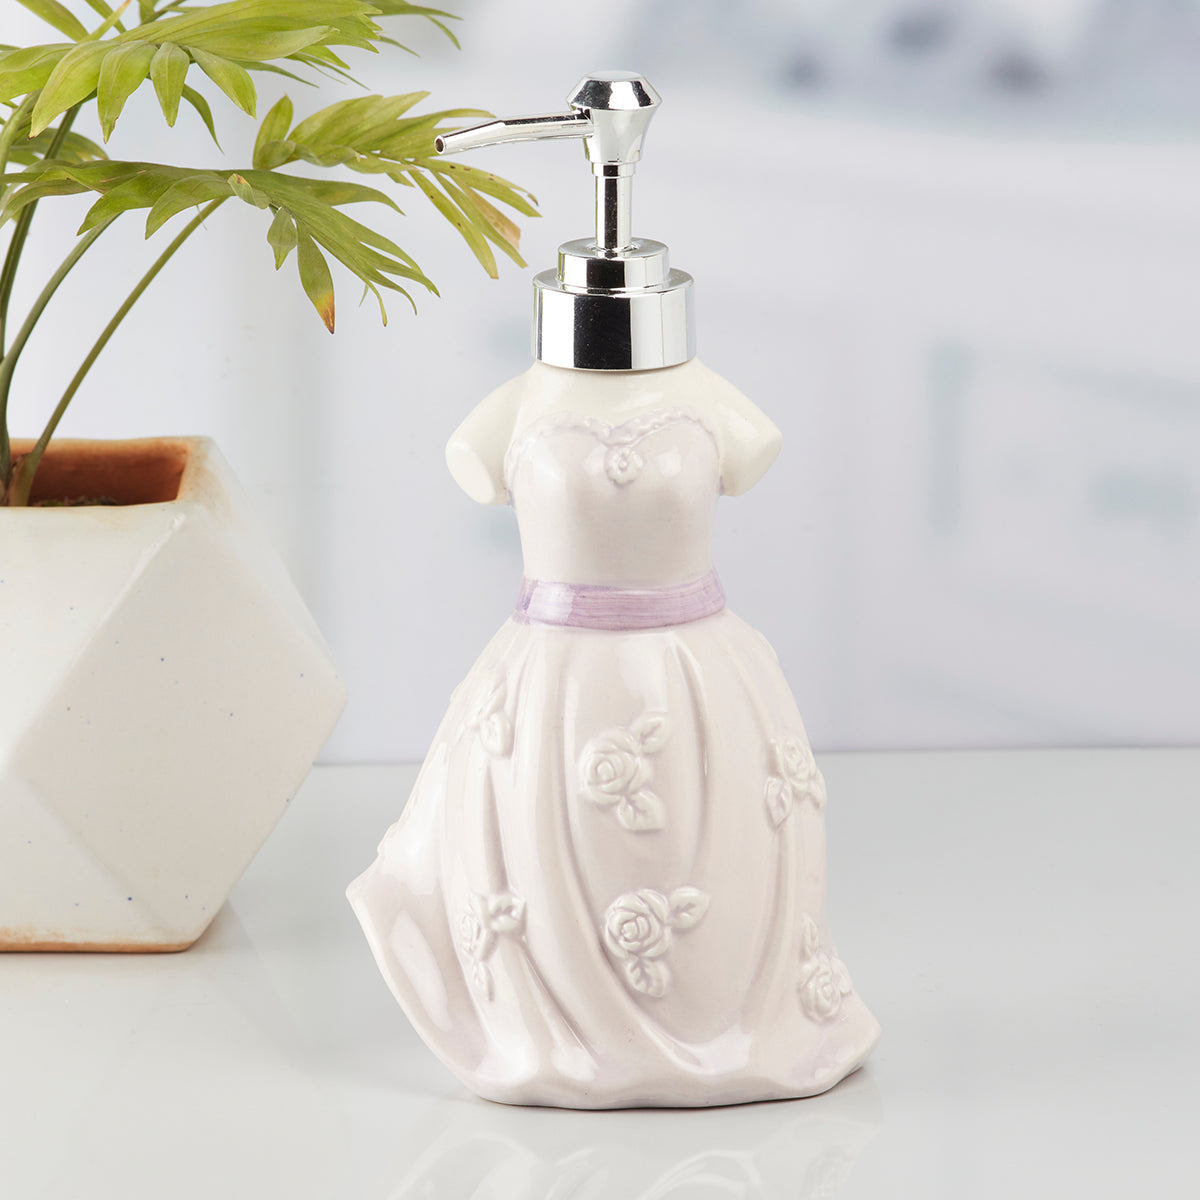 Ceramic Soap Dispenser handwash Pump for Bathroom, Set of 1, Purple (10161)